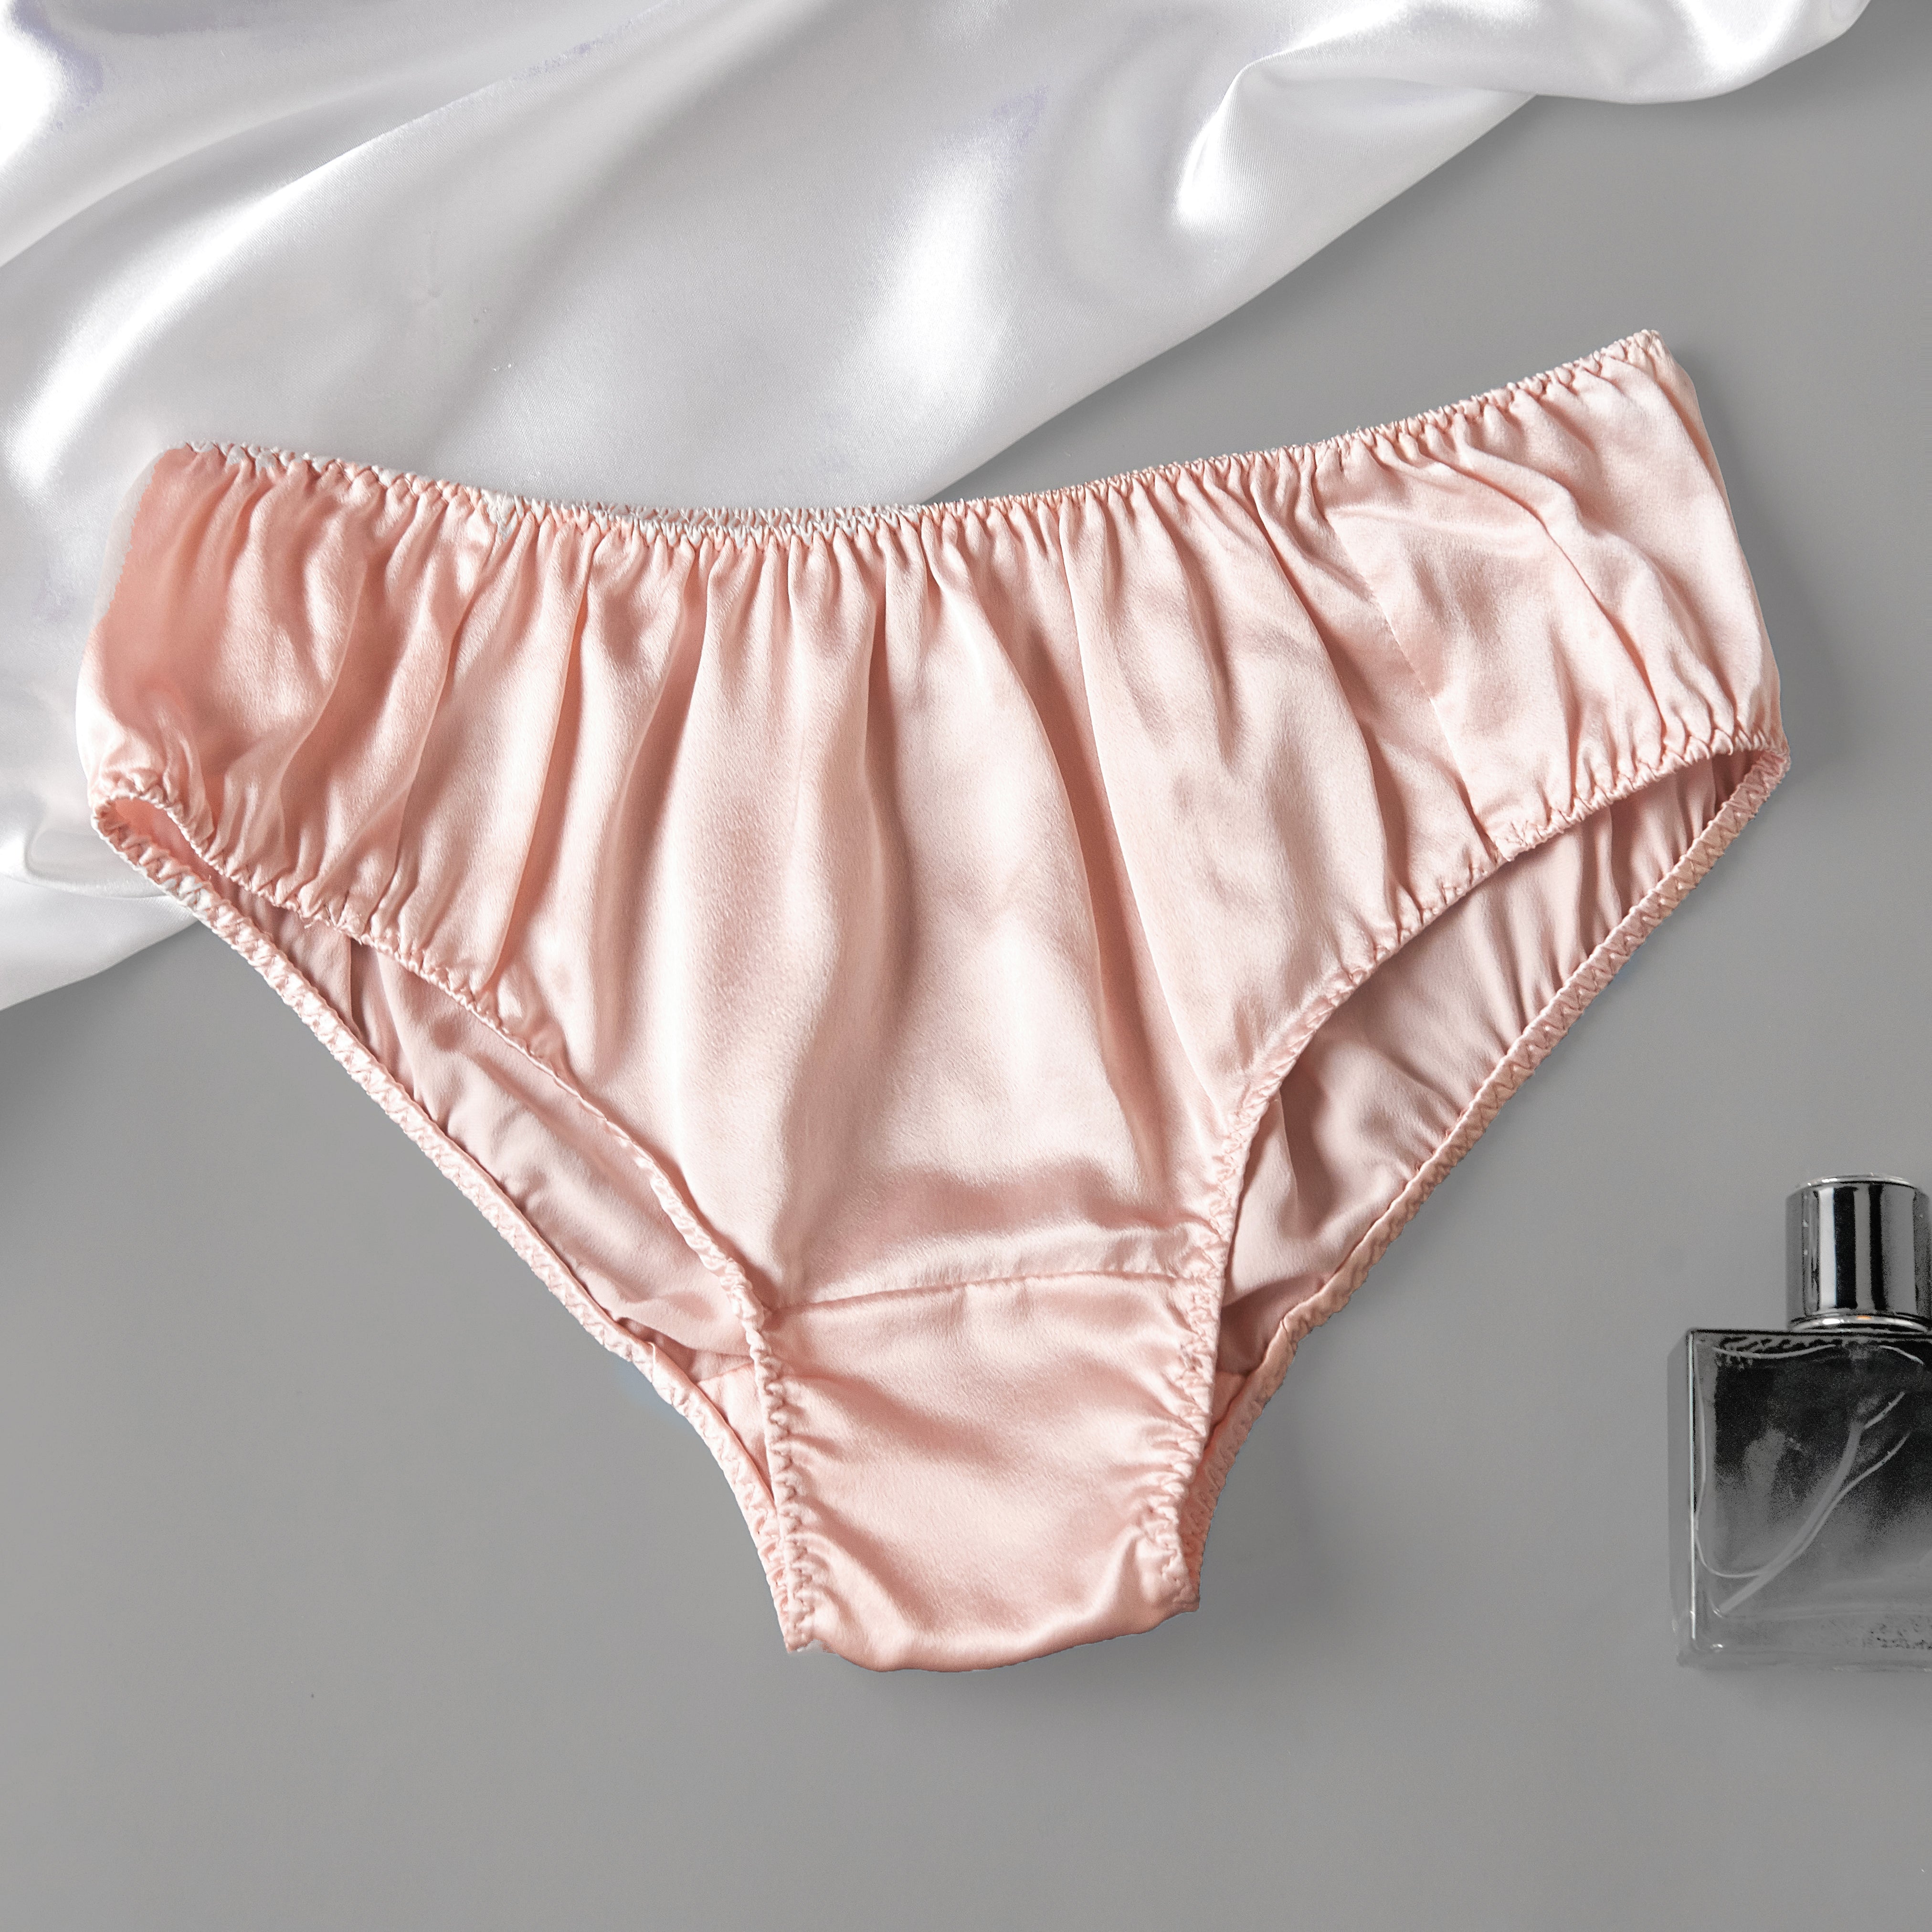 The Women's Underwear Debate: Could Your Underwear Be Affecting